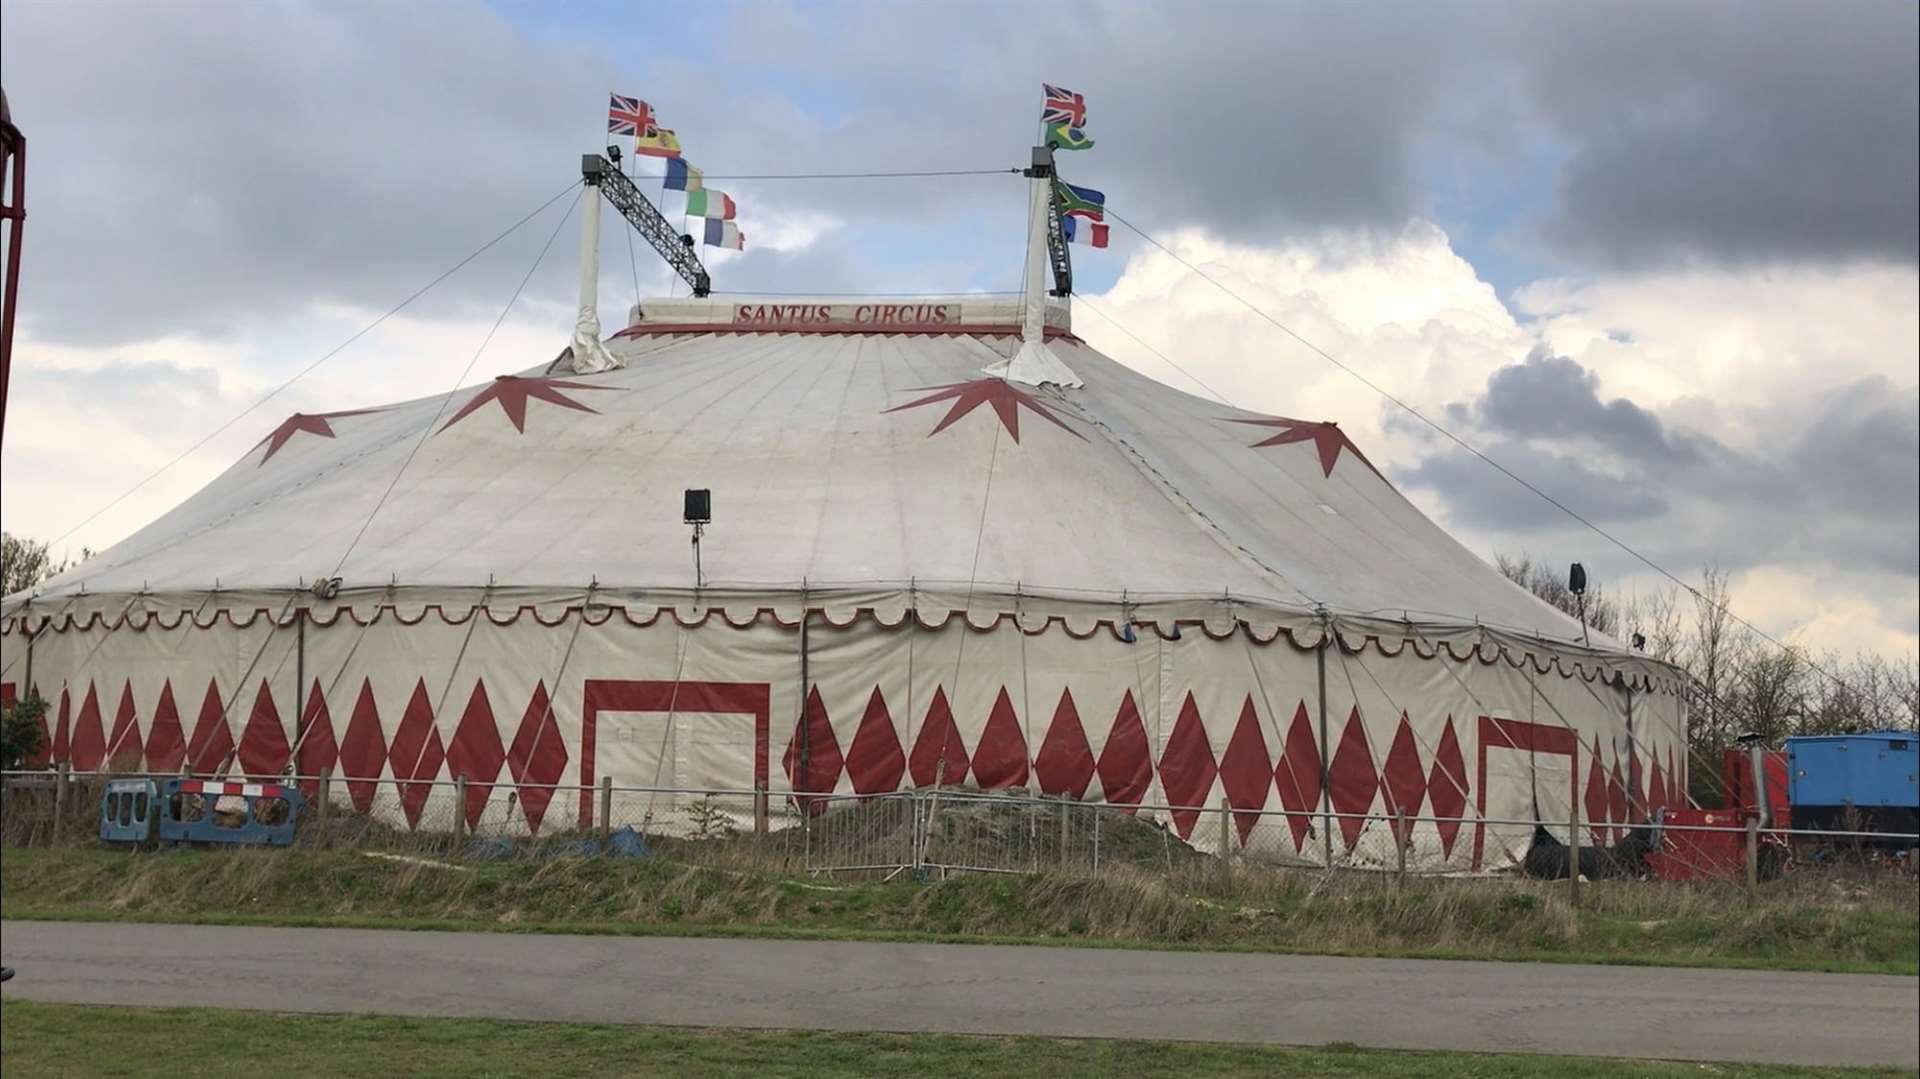 Santus Circus at the Cyclopark, Gravesend (8293088)